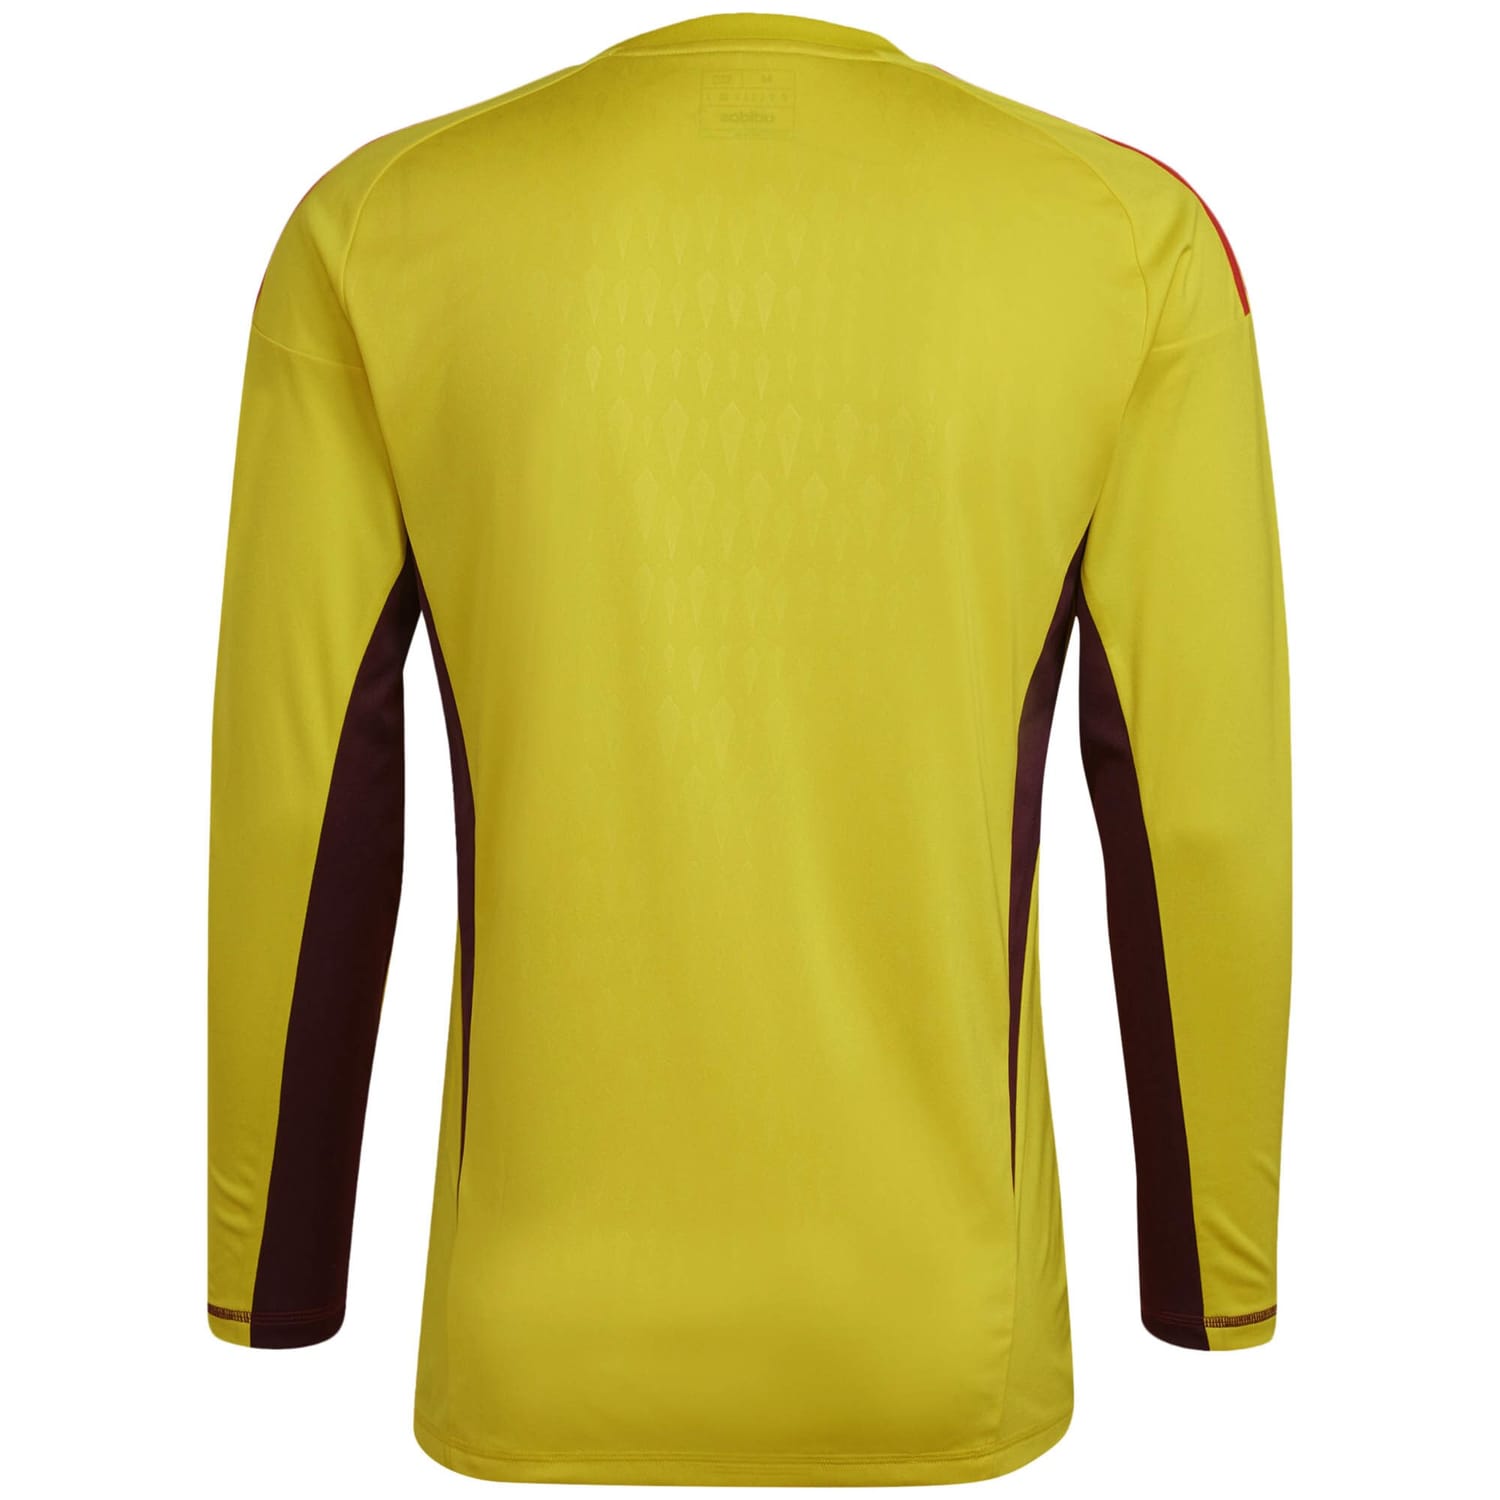 Spain National Team Goalkeeper Jersey Shirt 2022 for Men